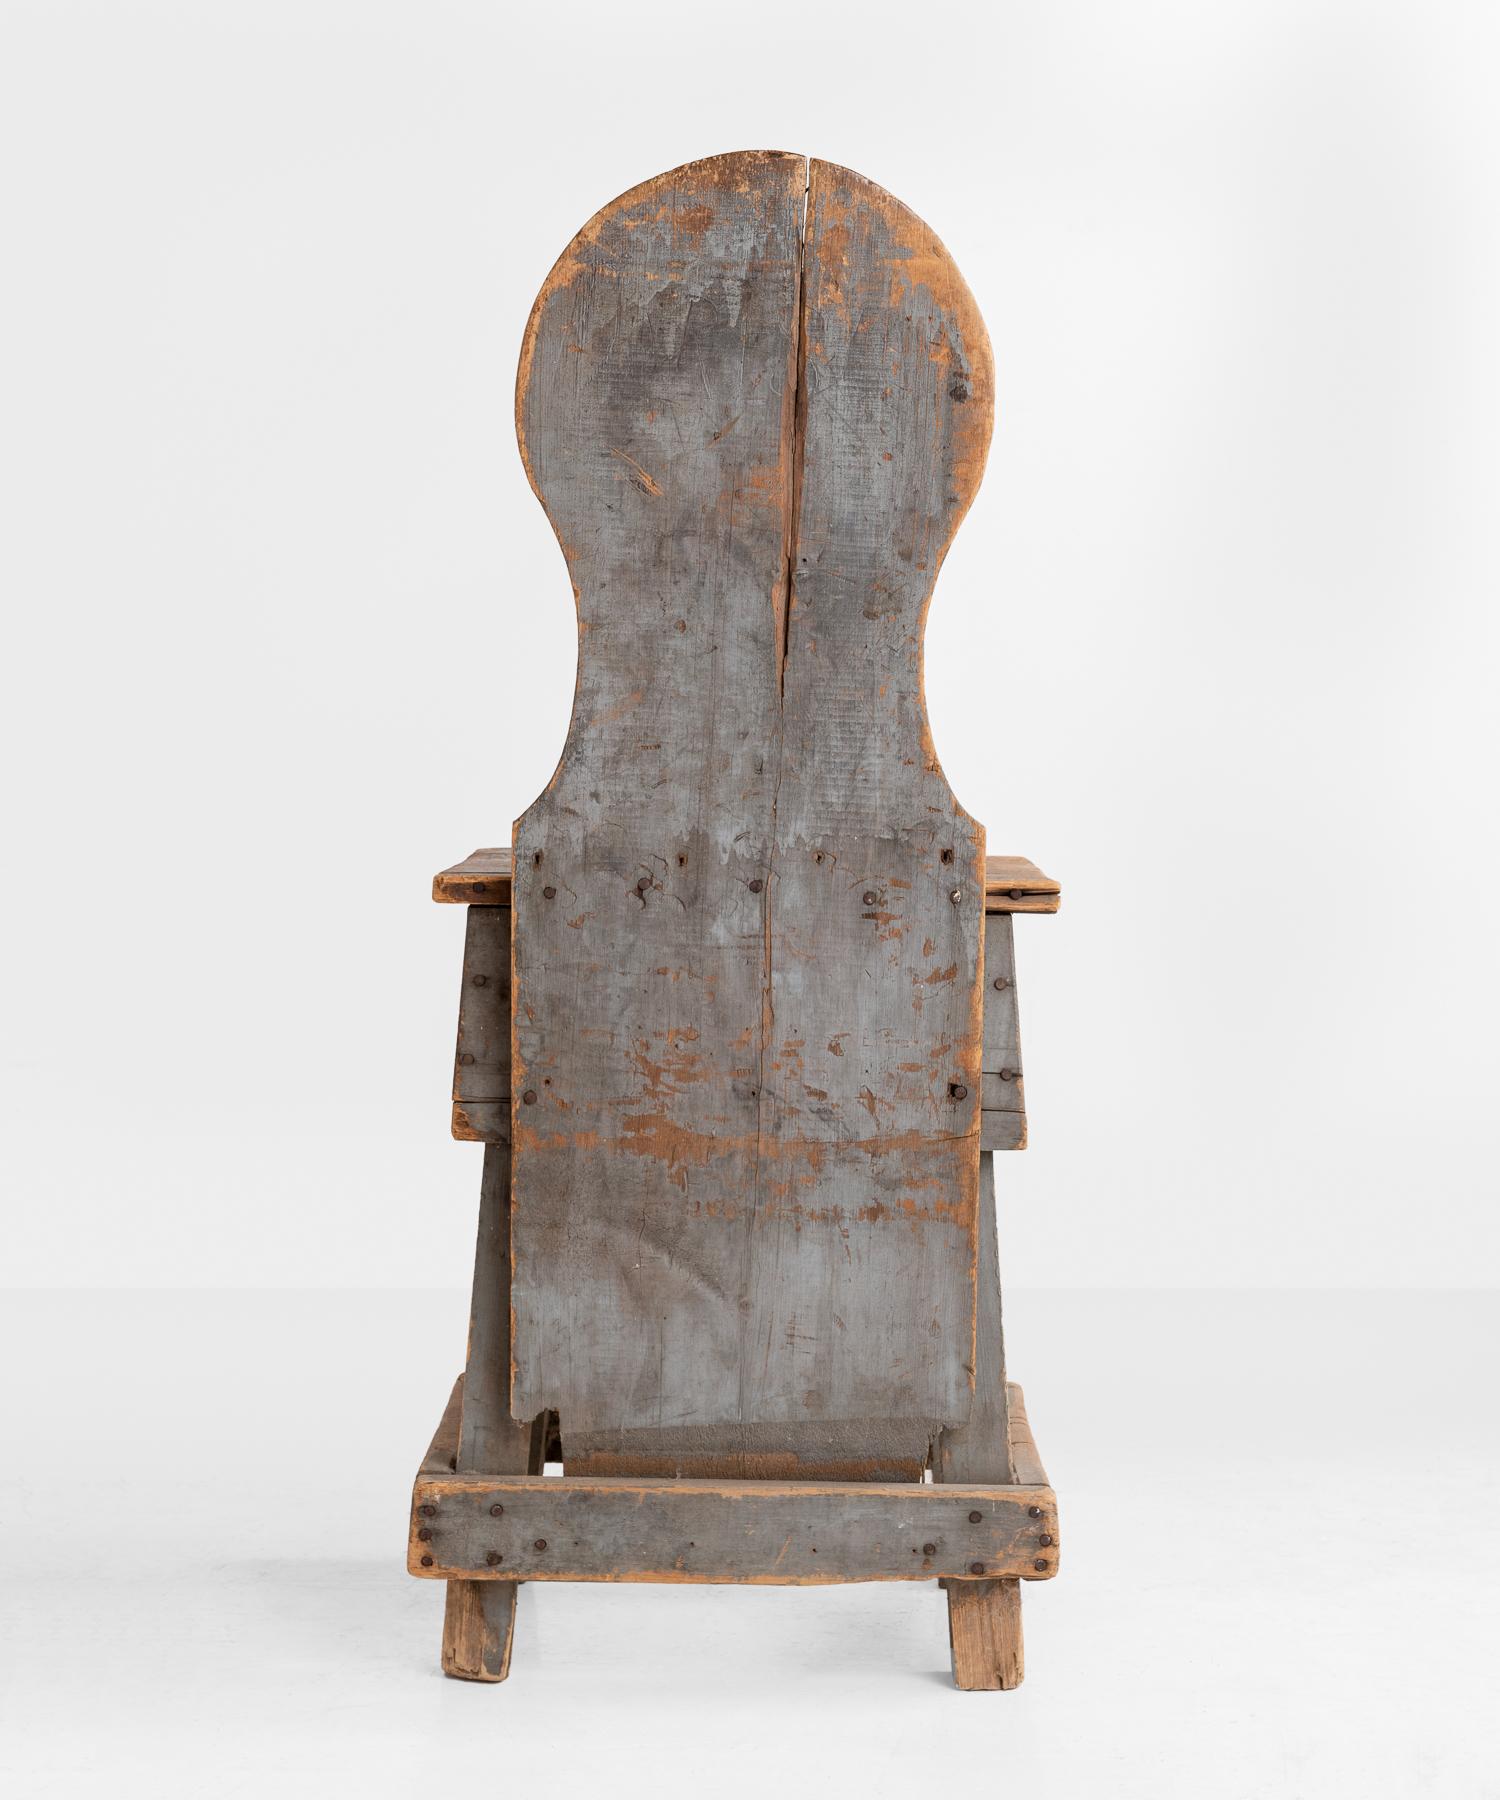 American Primitive Factory Chair, America, circa 1900